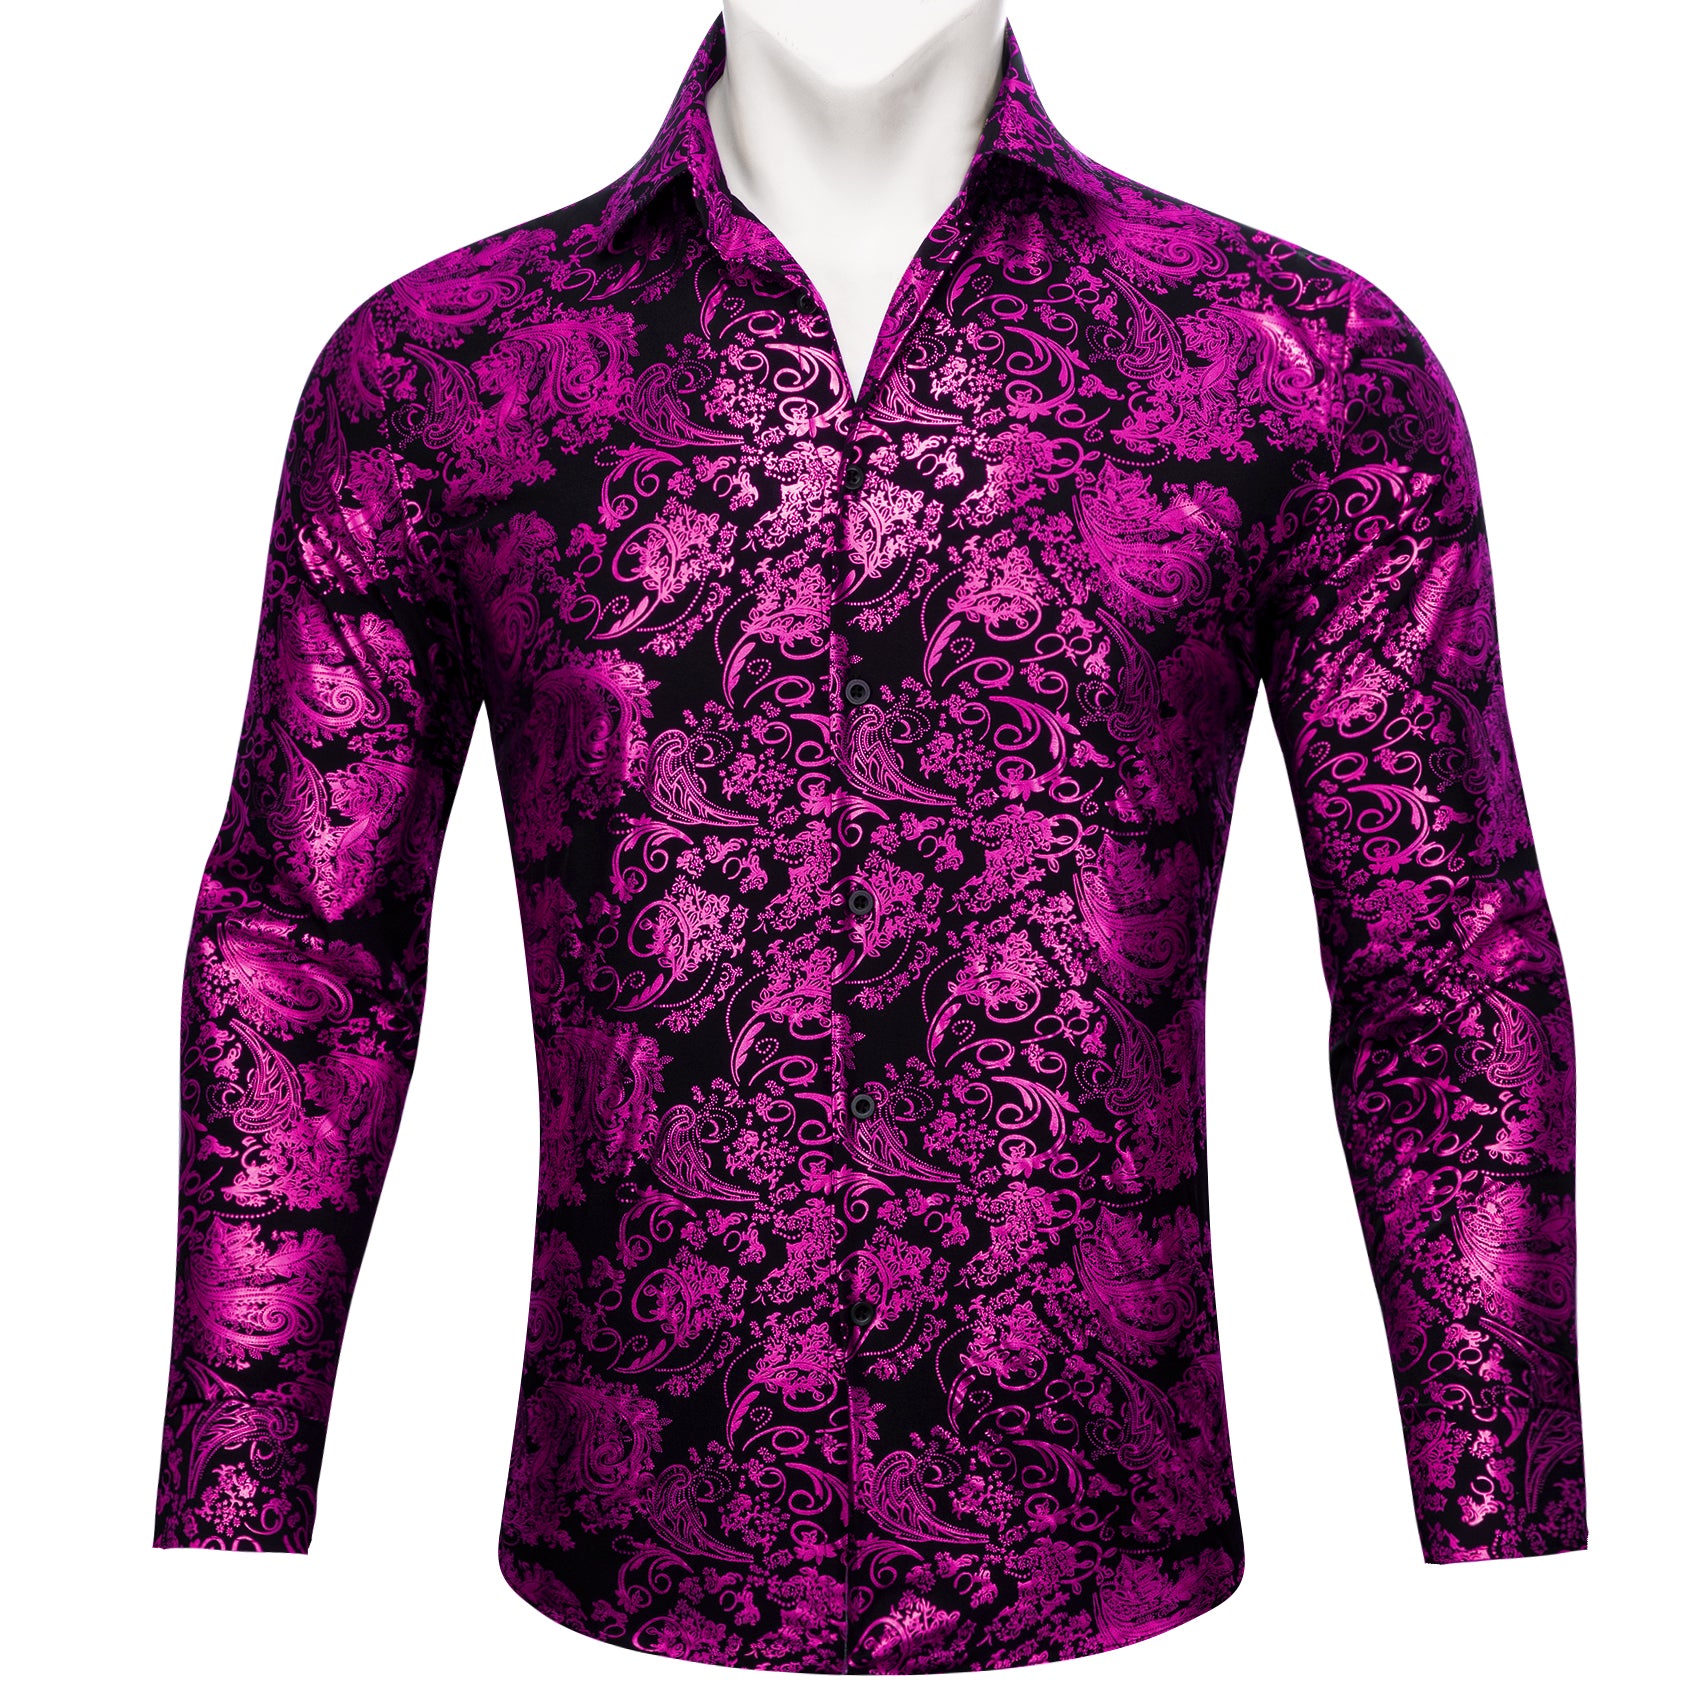 Barry.wang Lavender Black Paisley Silk Men's Shirt